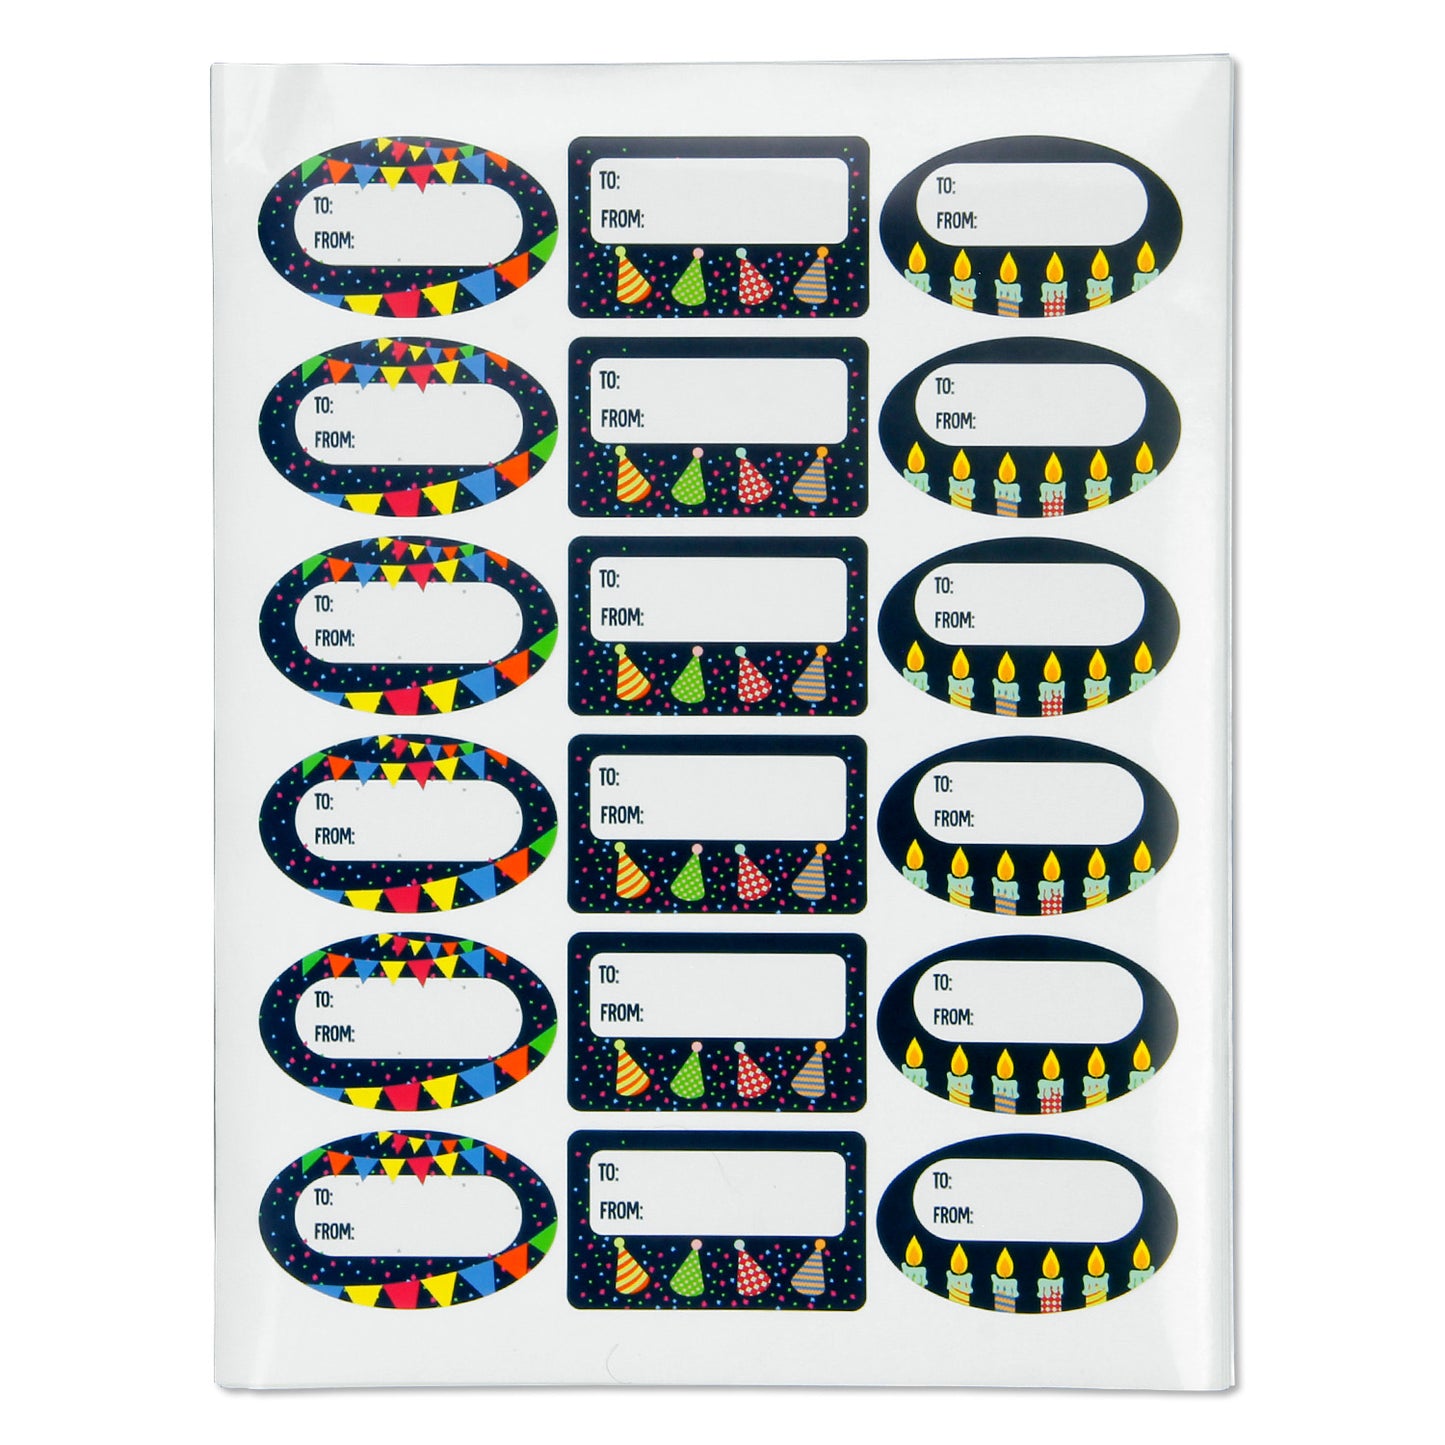 2.5 x 1.5 inch | Black Birthday Gift Tag Stickers (3 Designs)